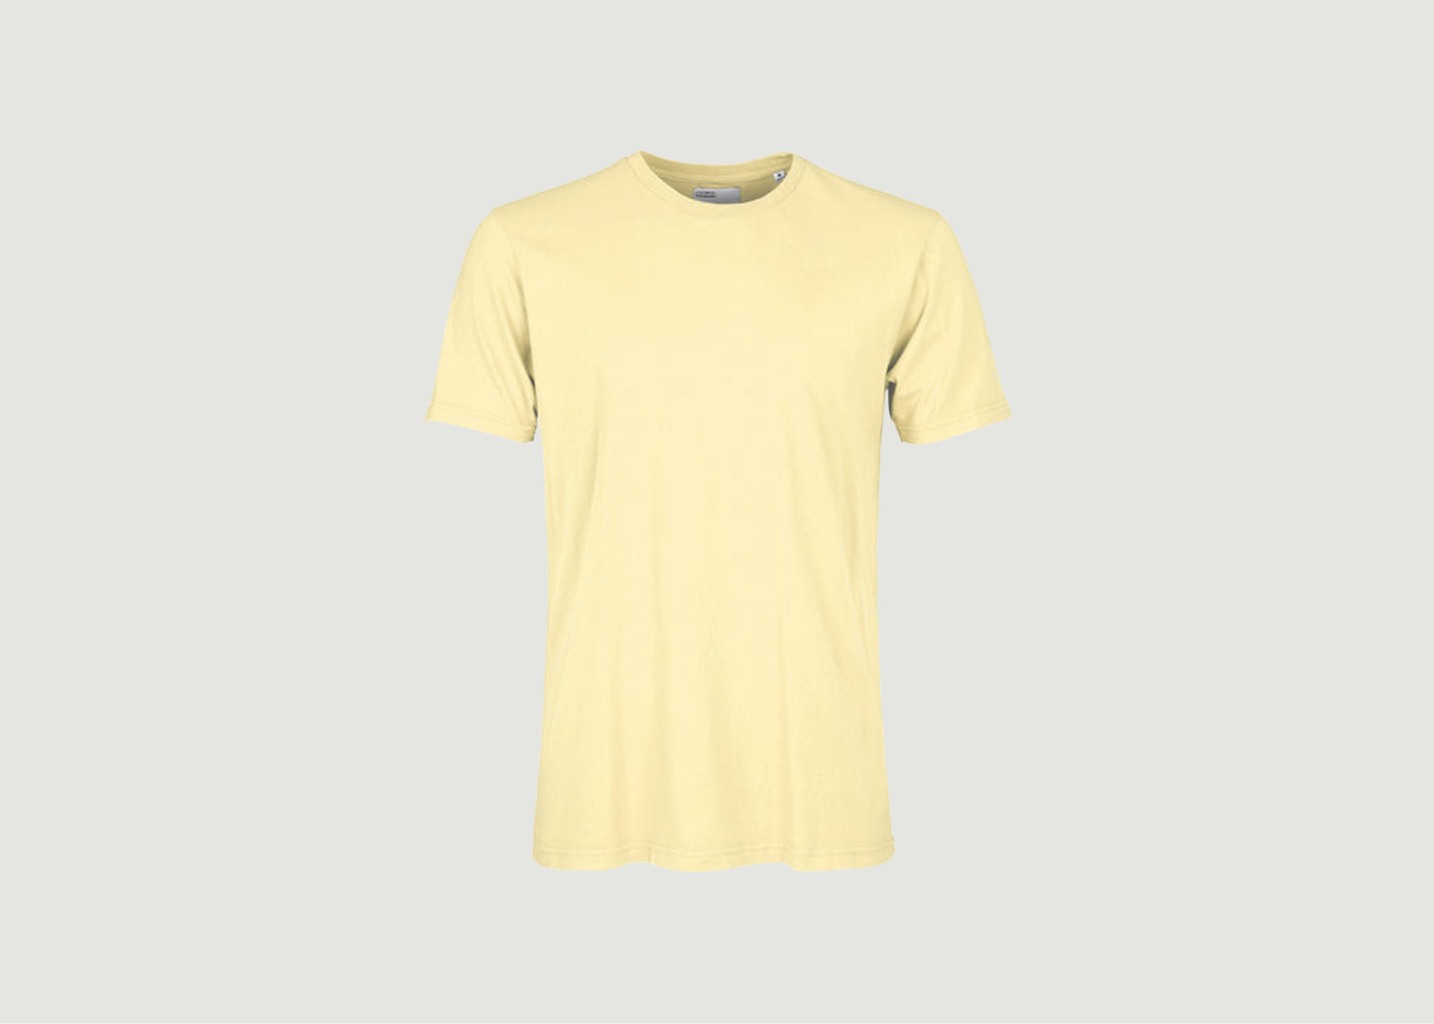 Colorful Standard Classic Organic Cotton T-Shirt